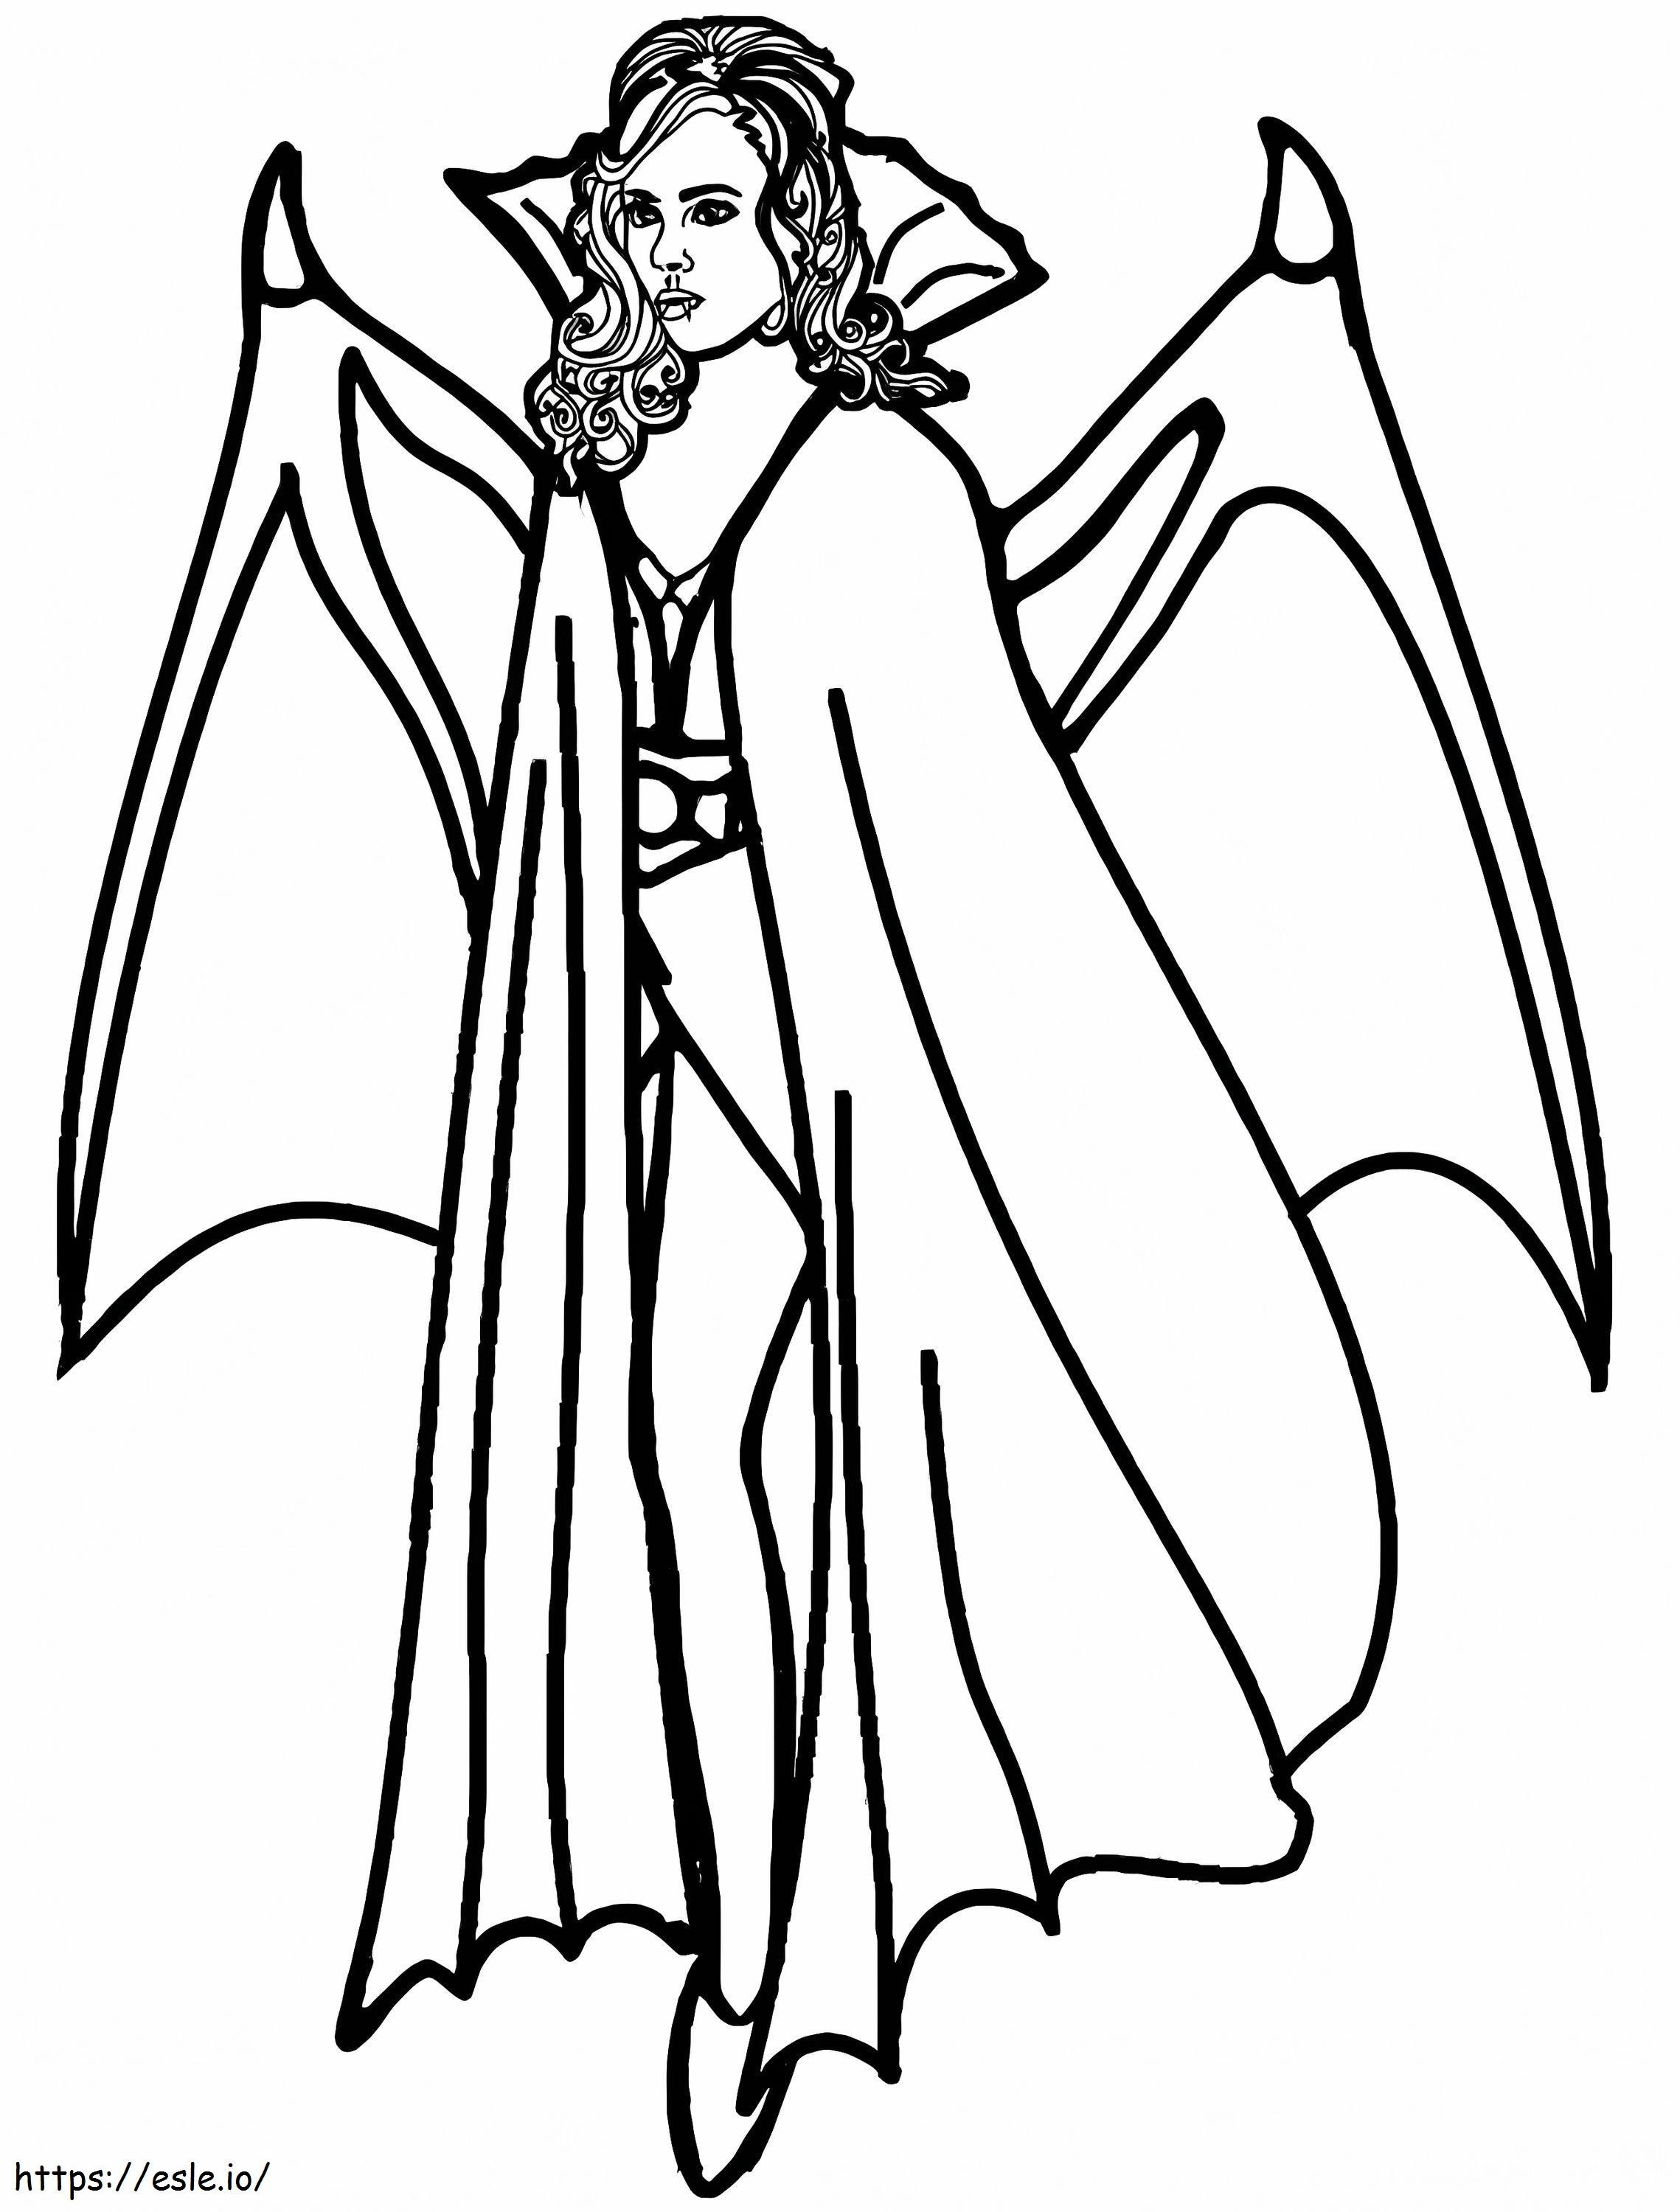 Vampire Queen coloring page